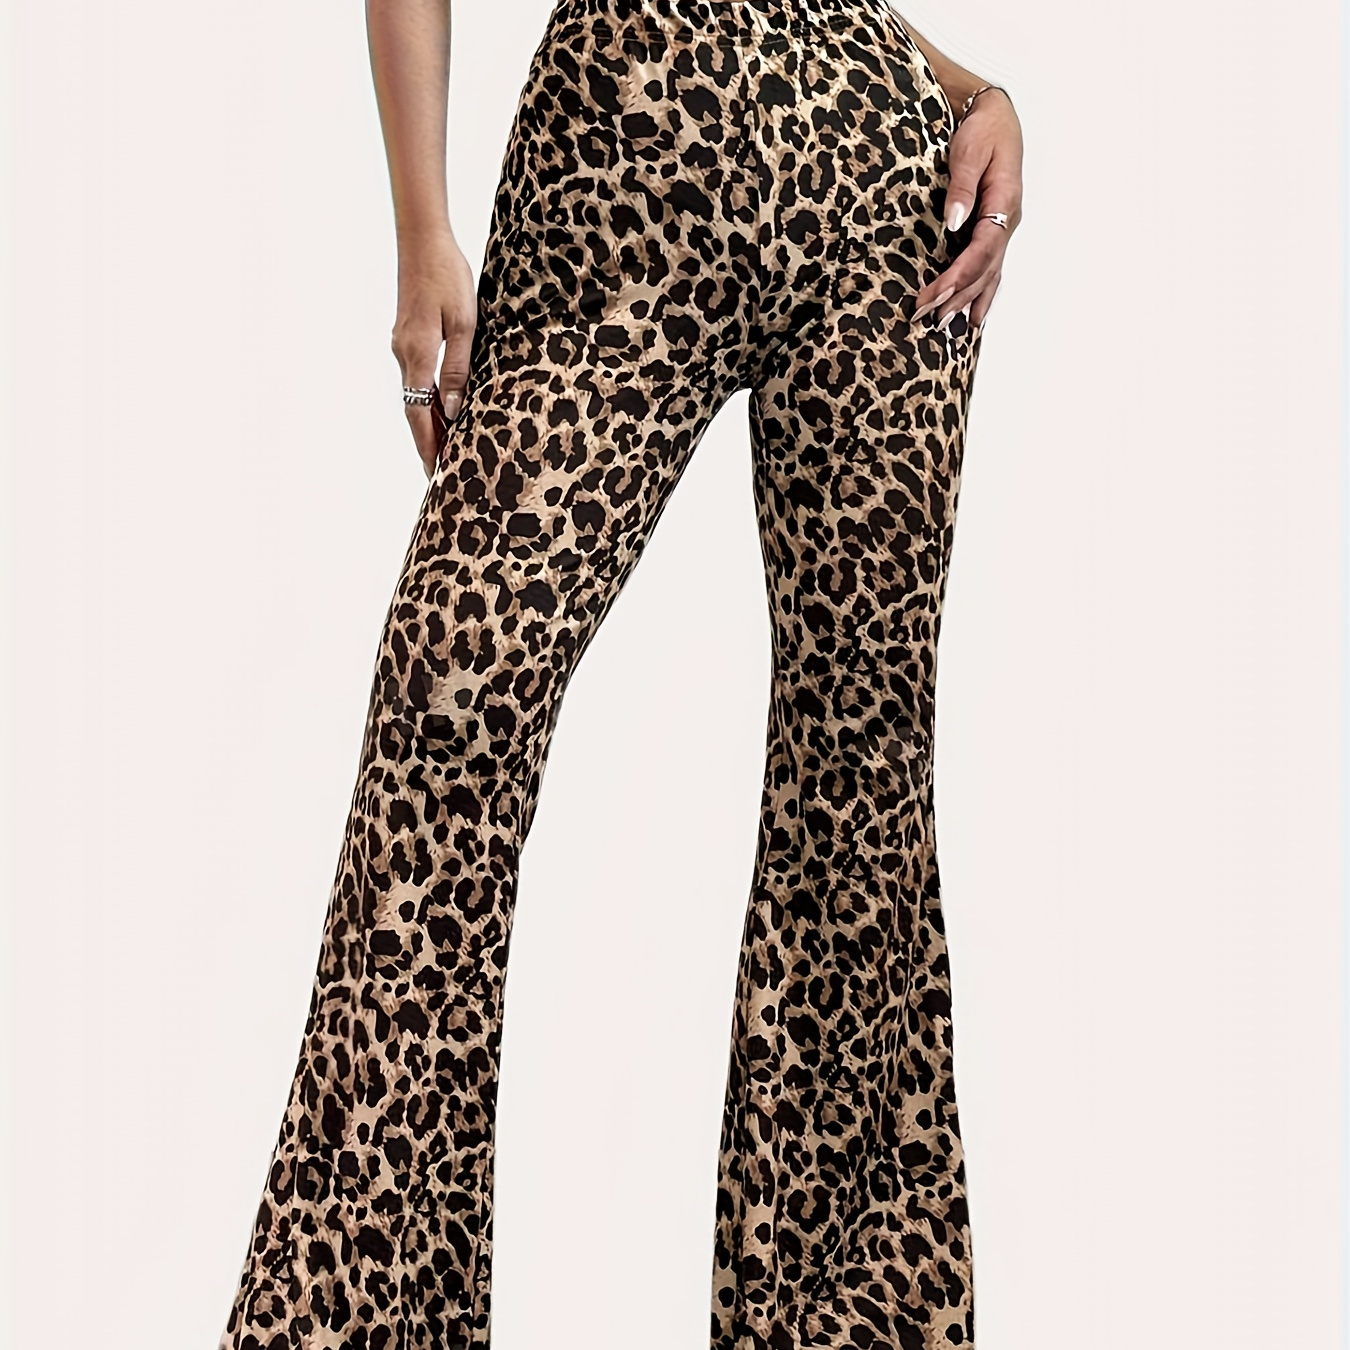 

Leopard Print Flare Leg Pants, Casual High Waist Forbidden Pants For Spring & Summer, Women's Clothing